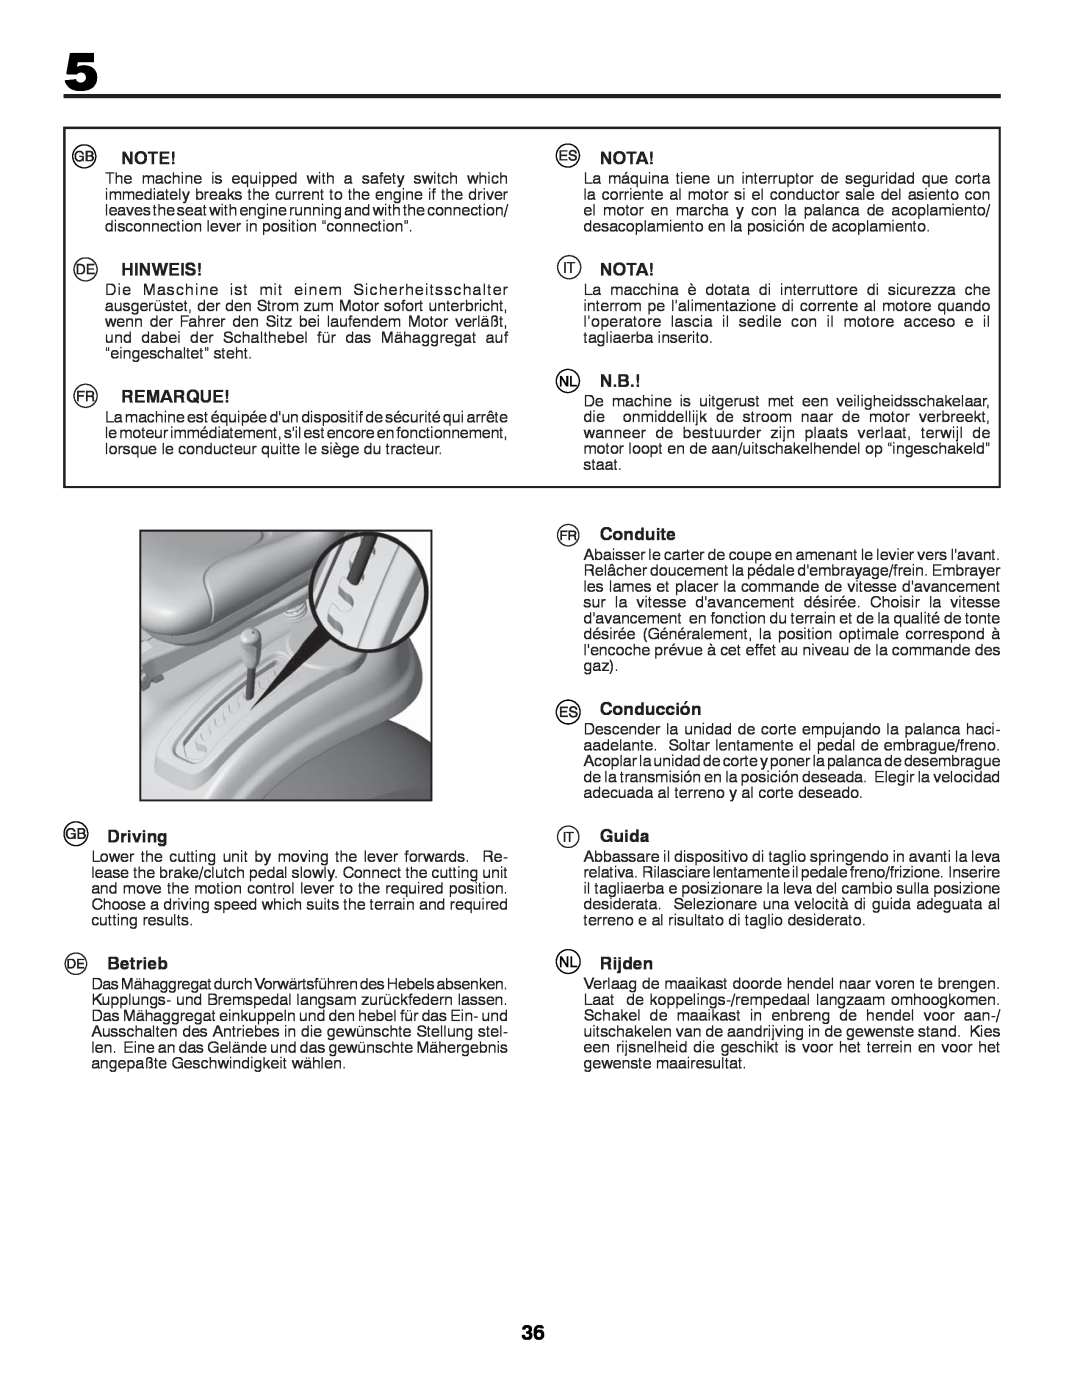 Husqvarna LTH152 instruction manual Hinweis, Remarque, Nota, Driving, Betrieb, Conduite, Conducción, Guida, Rijden 